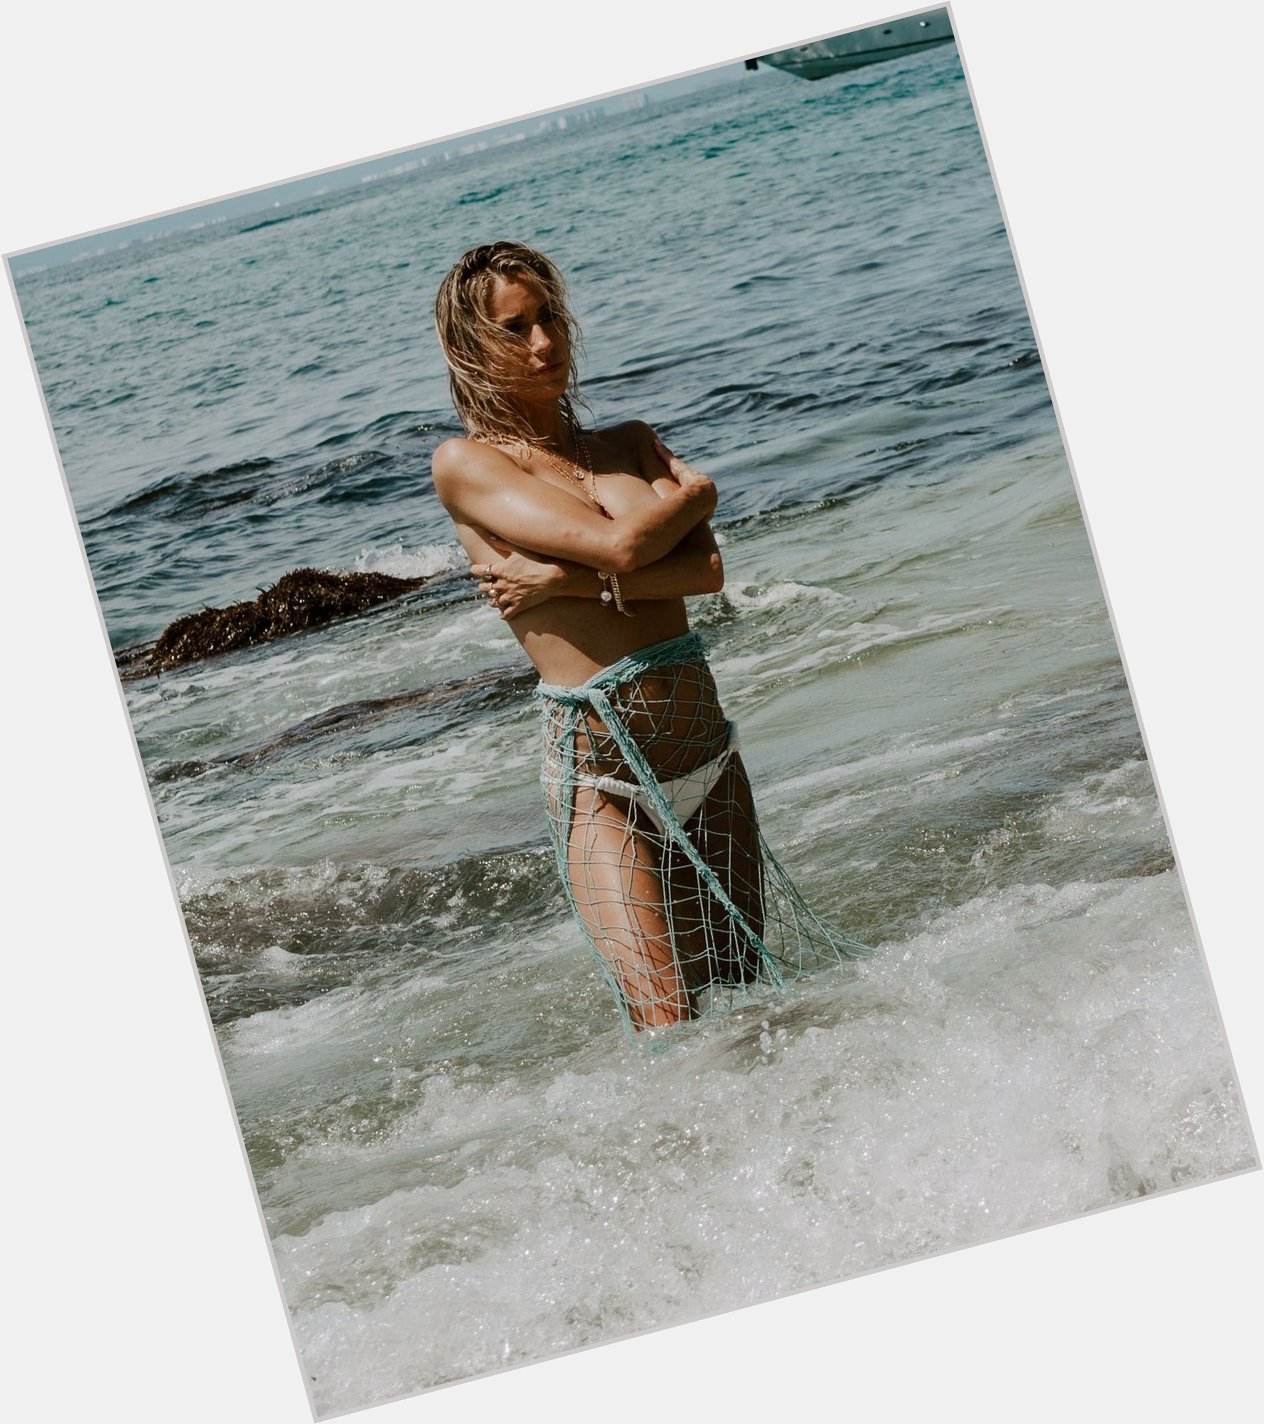 Happy Birthday to Kristin Cavallari (34)
Kristin Cavallari on a beach in Mexico. 